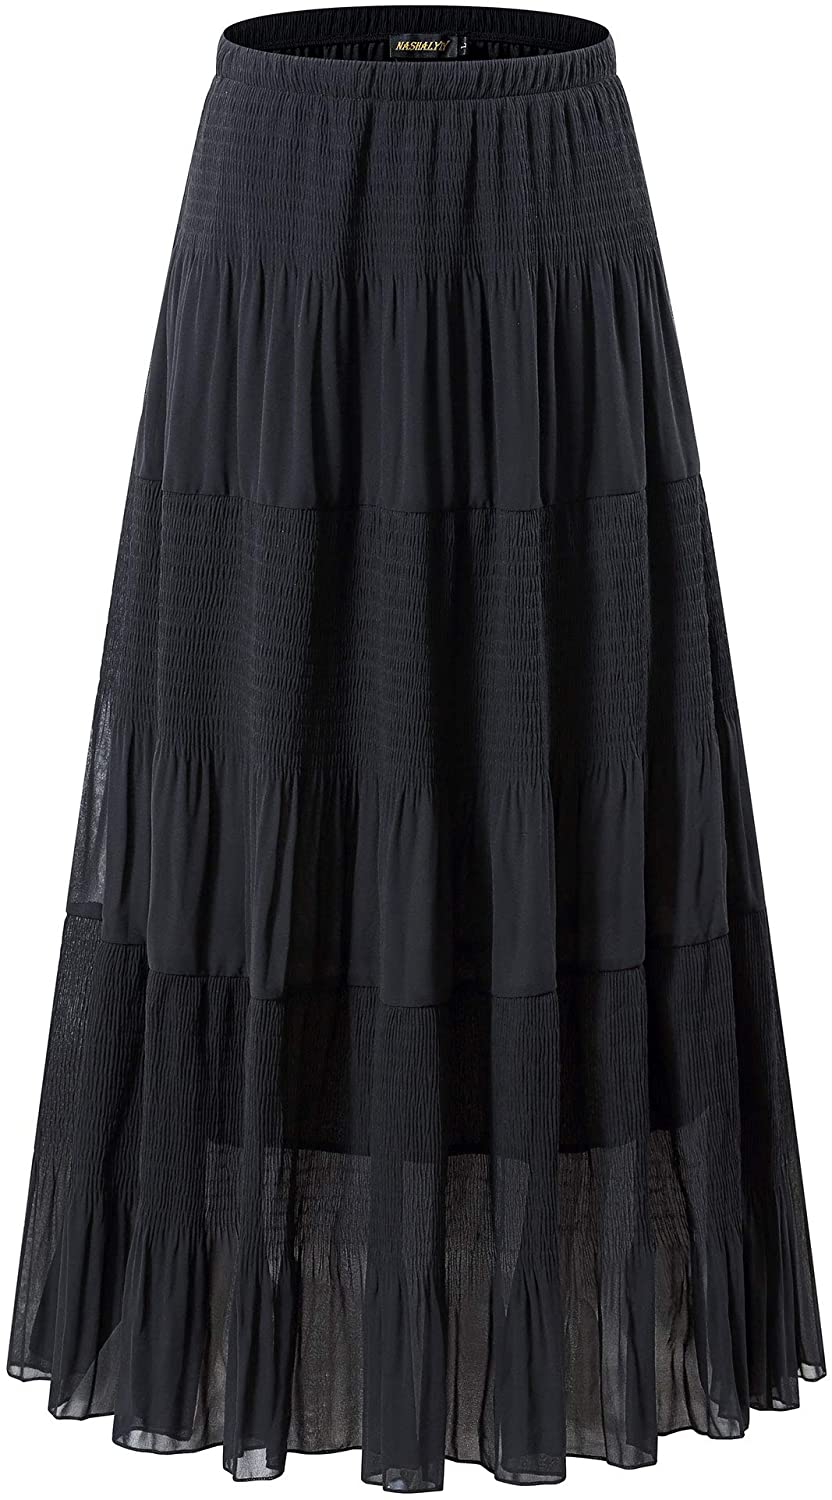 NASHALYLY Womens Maxi Skirt Chiffon High Waist Pleated A-Line Long Skirts 